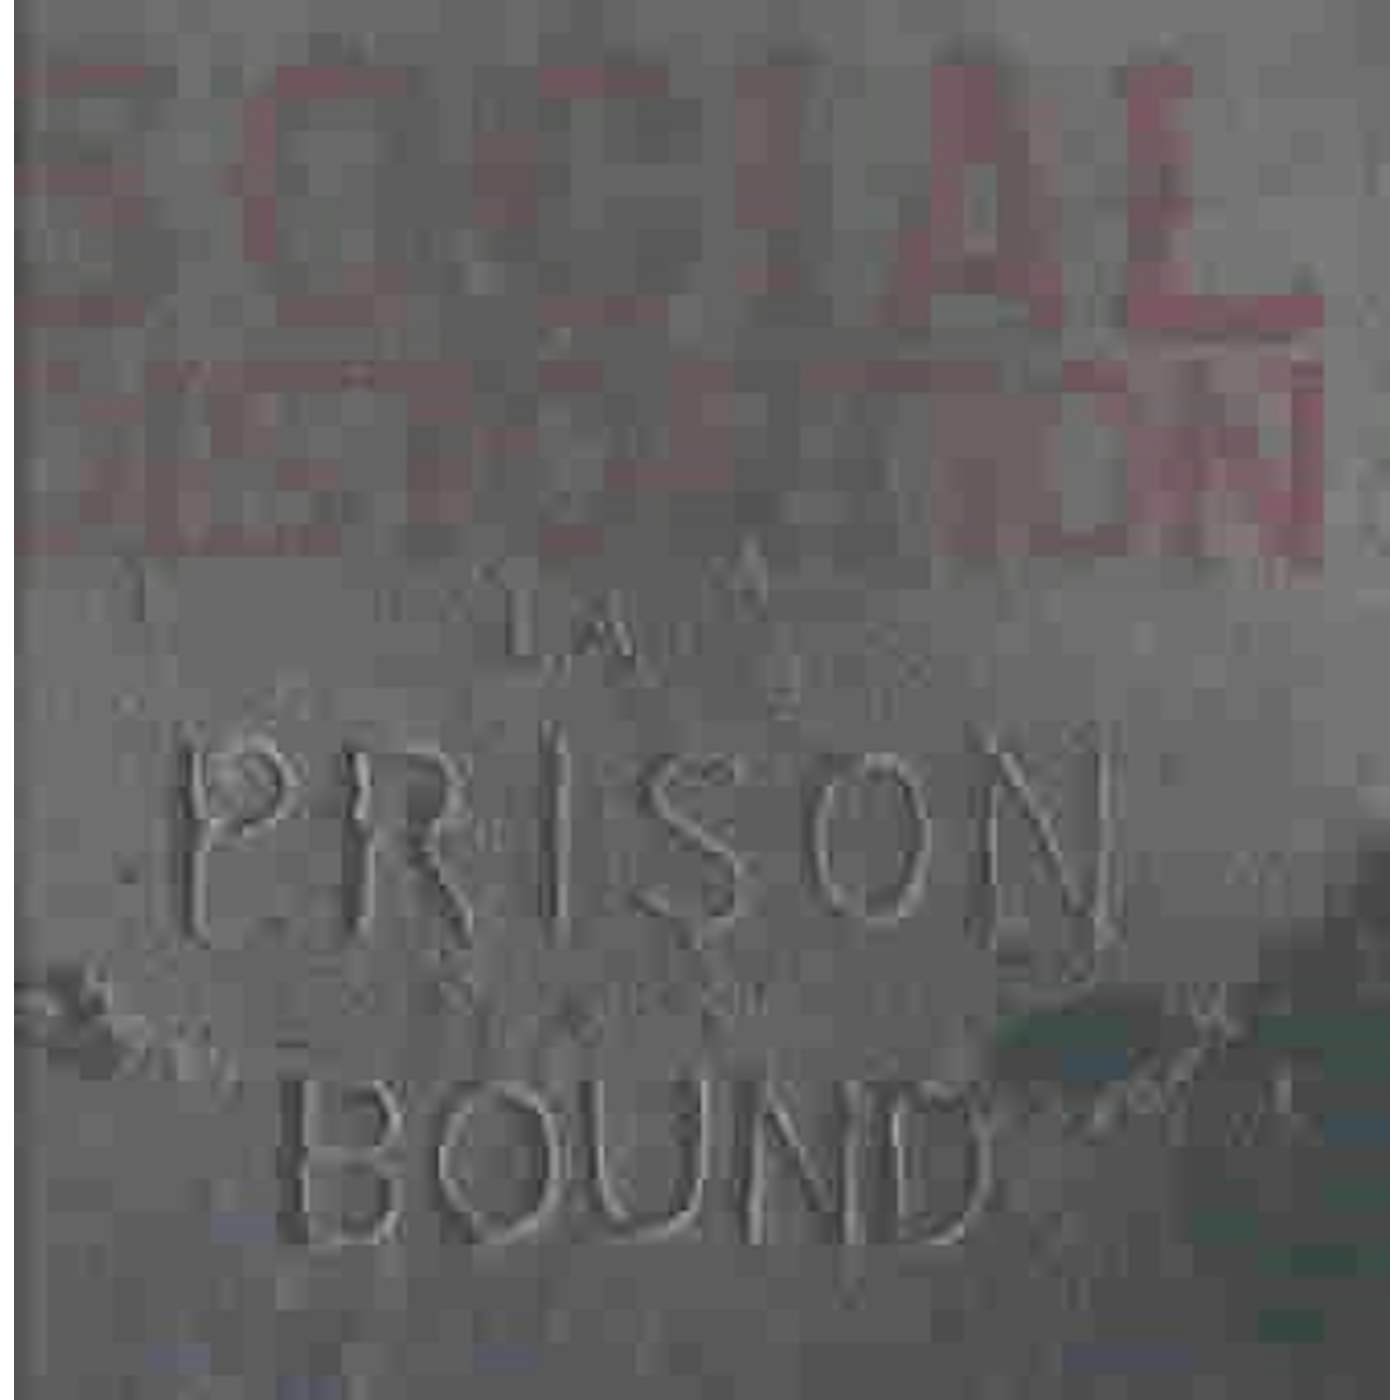 Social Distortion PRISON BOUND CD